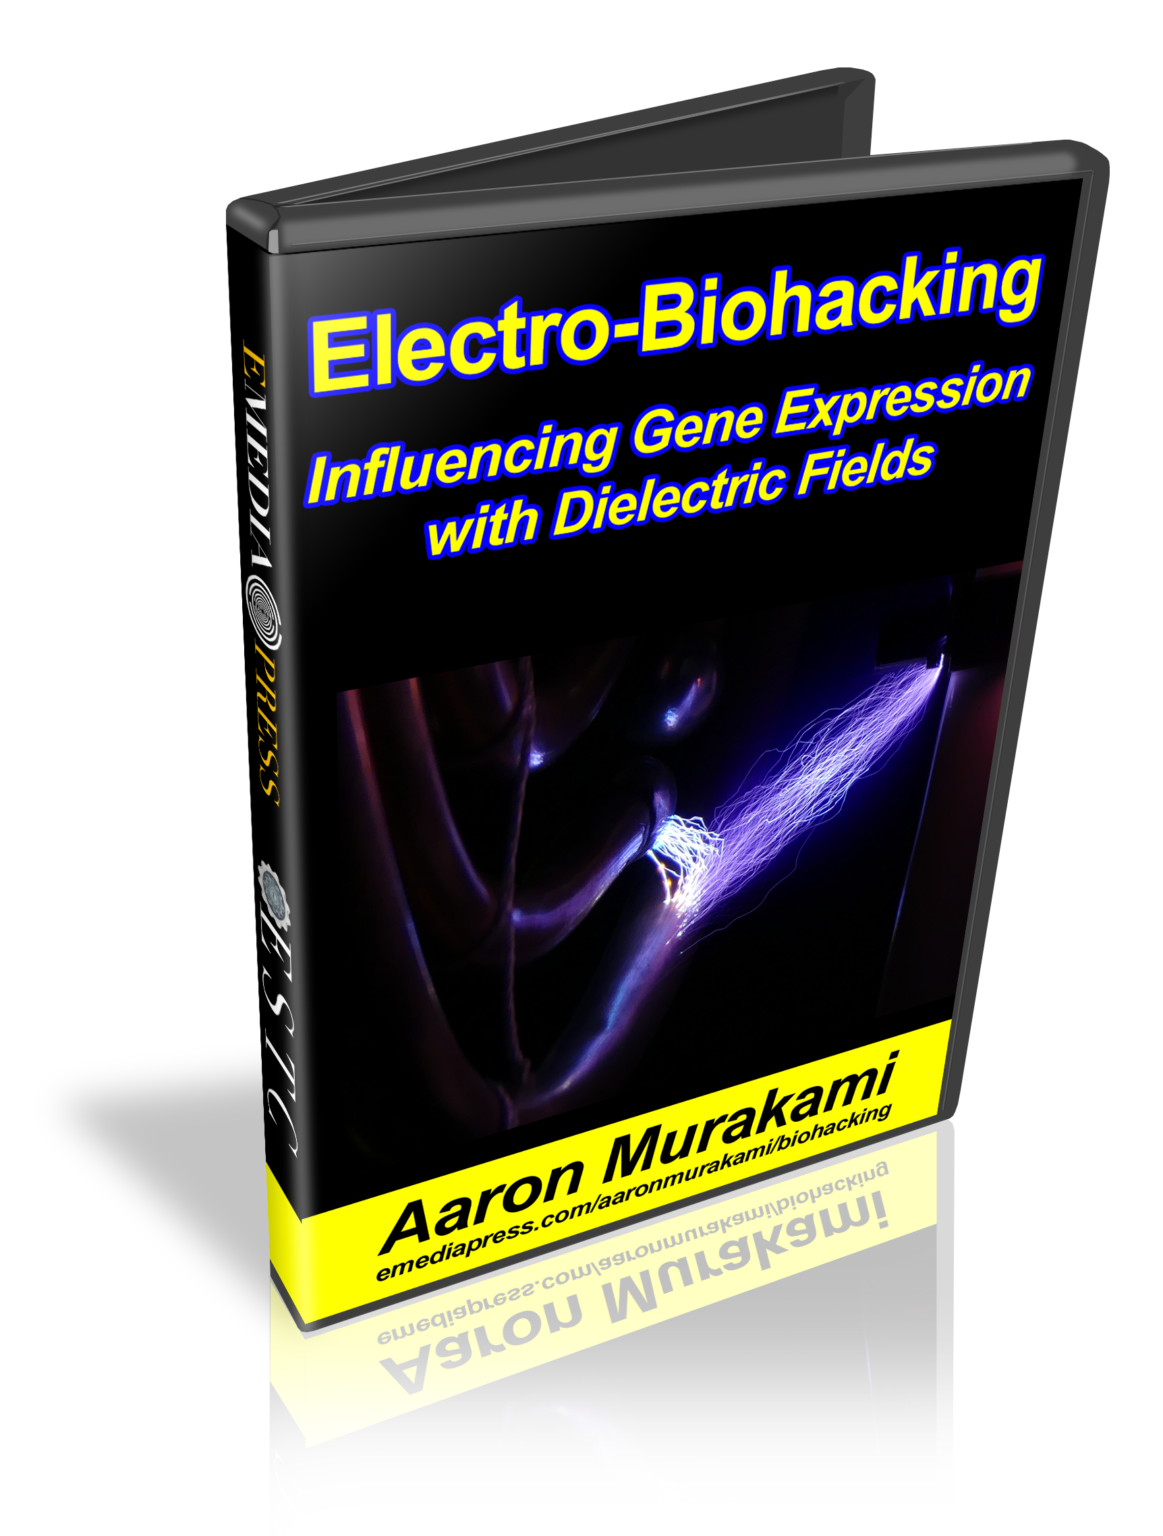 Electro-Biohacking by Aaron Murakami